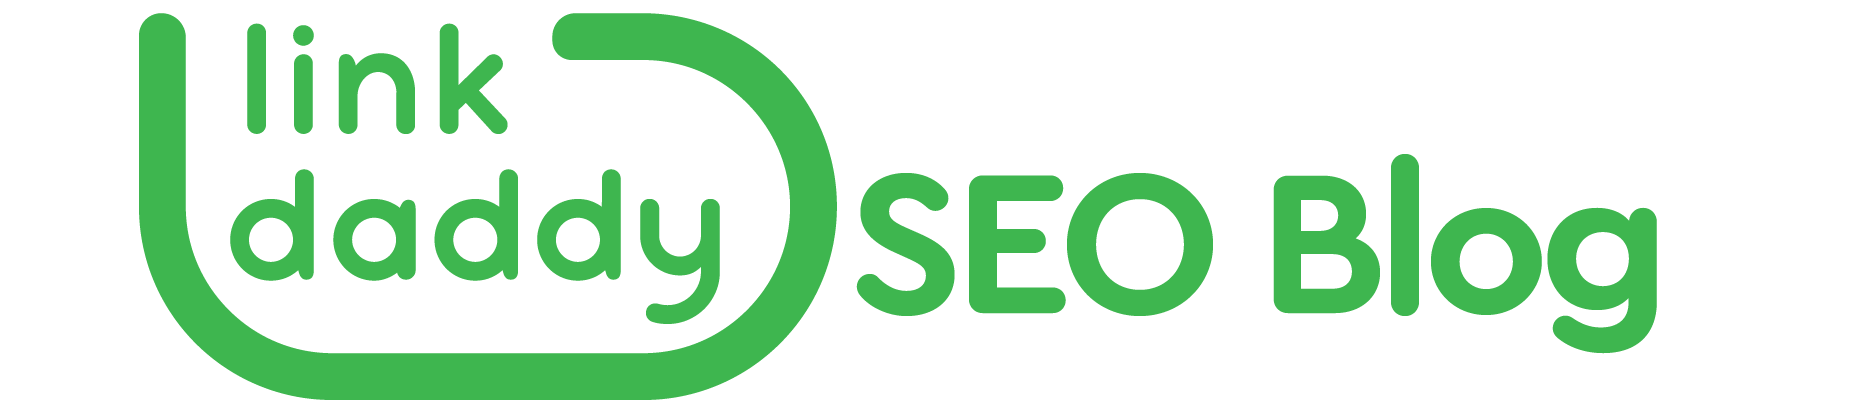 https://storage.googleapis.com/cloudsites/seo-services/8678brxxc/img/cropped-linkdaddy-seoblog-logo.png